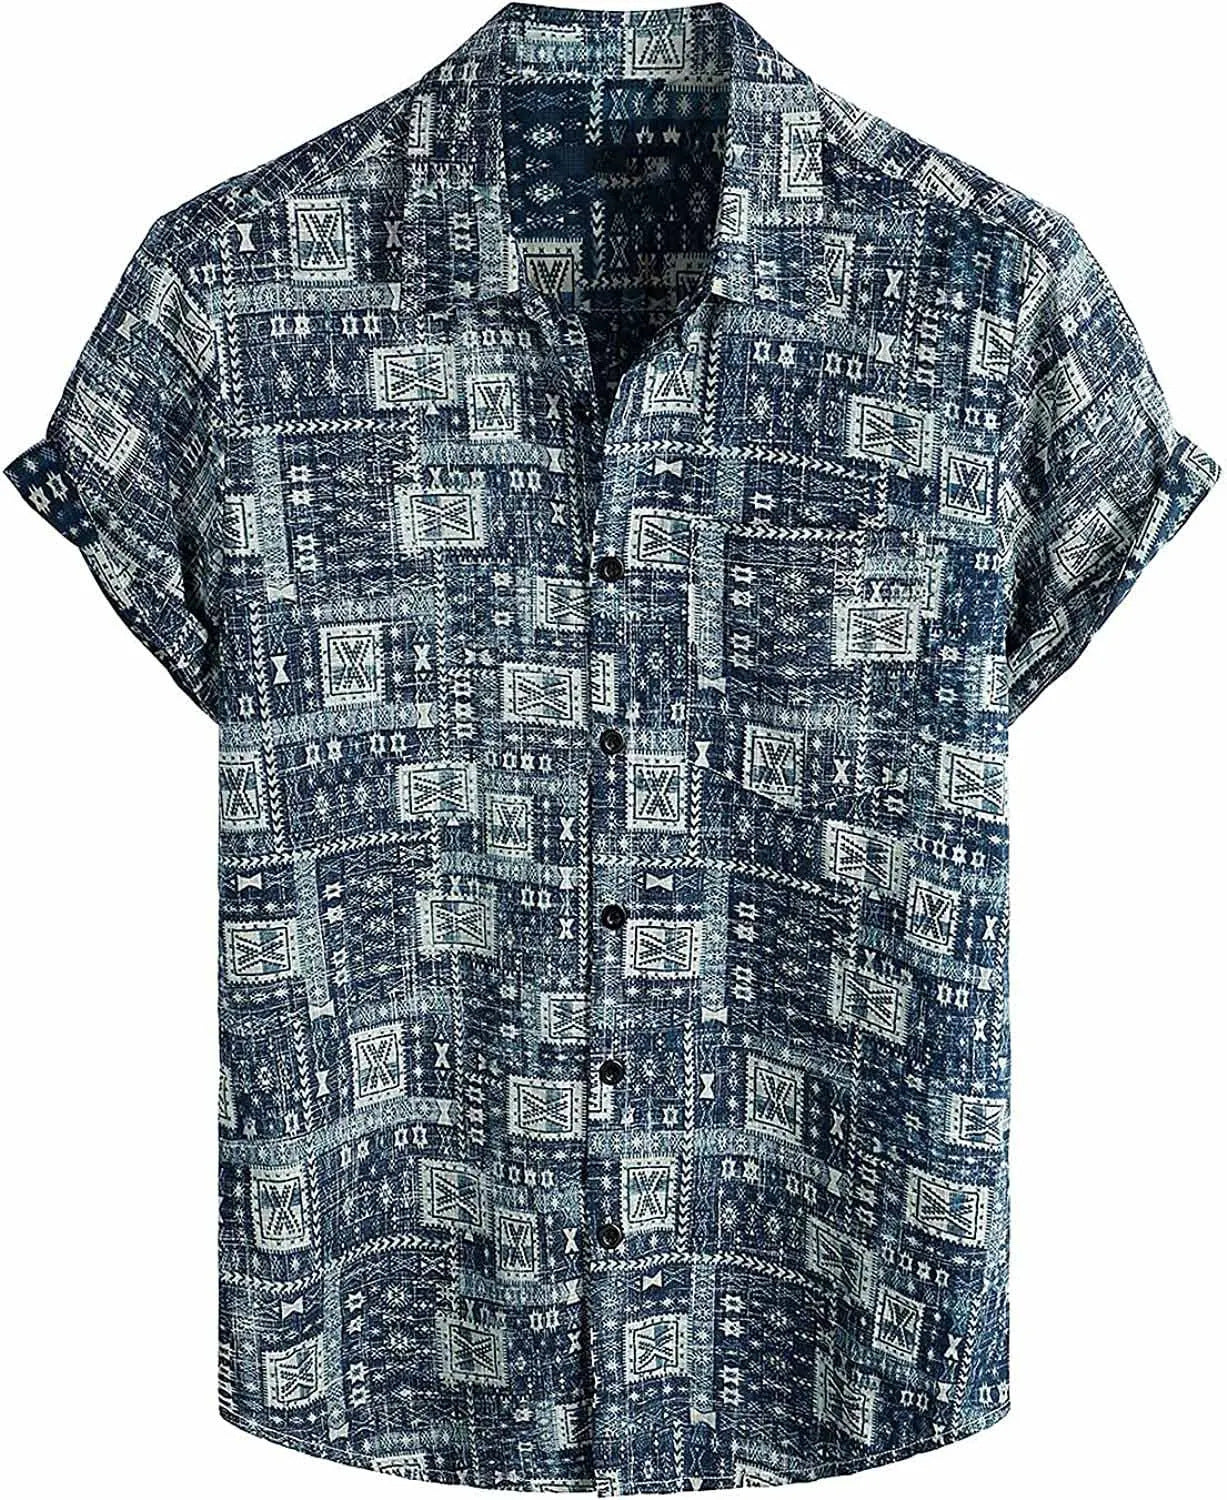 Men's Hawaiian Casual Flower Short Sleeve Single-breasted Beach Tropical Shirt